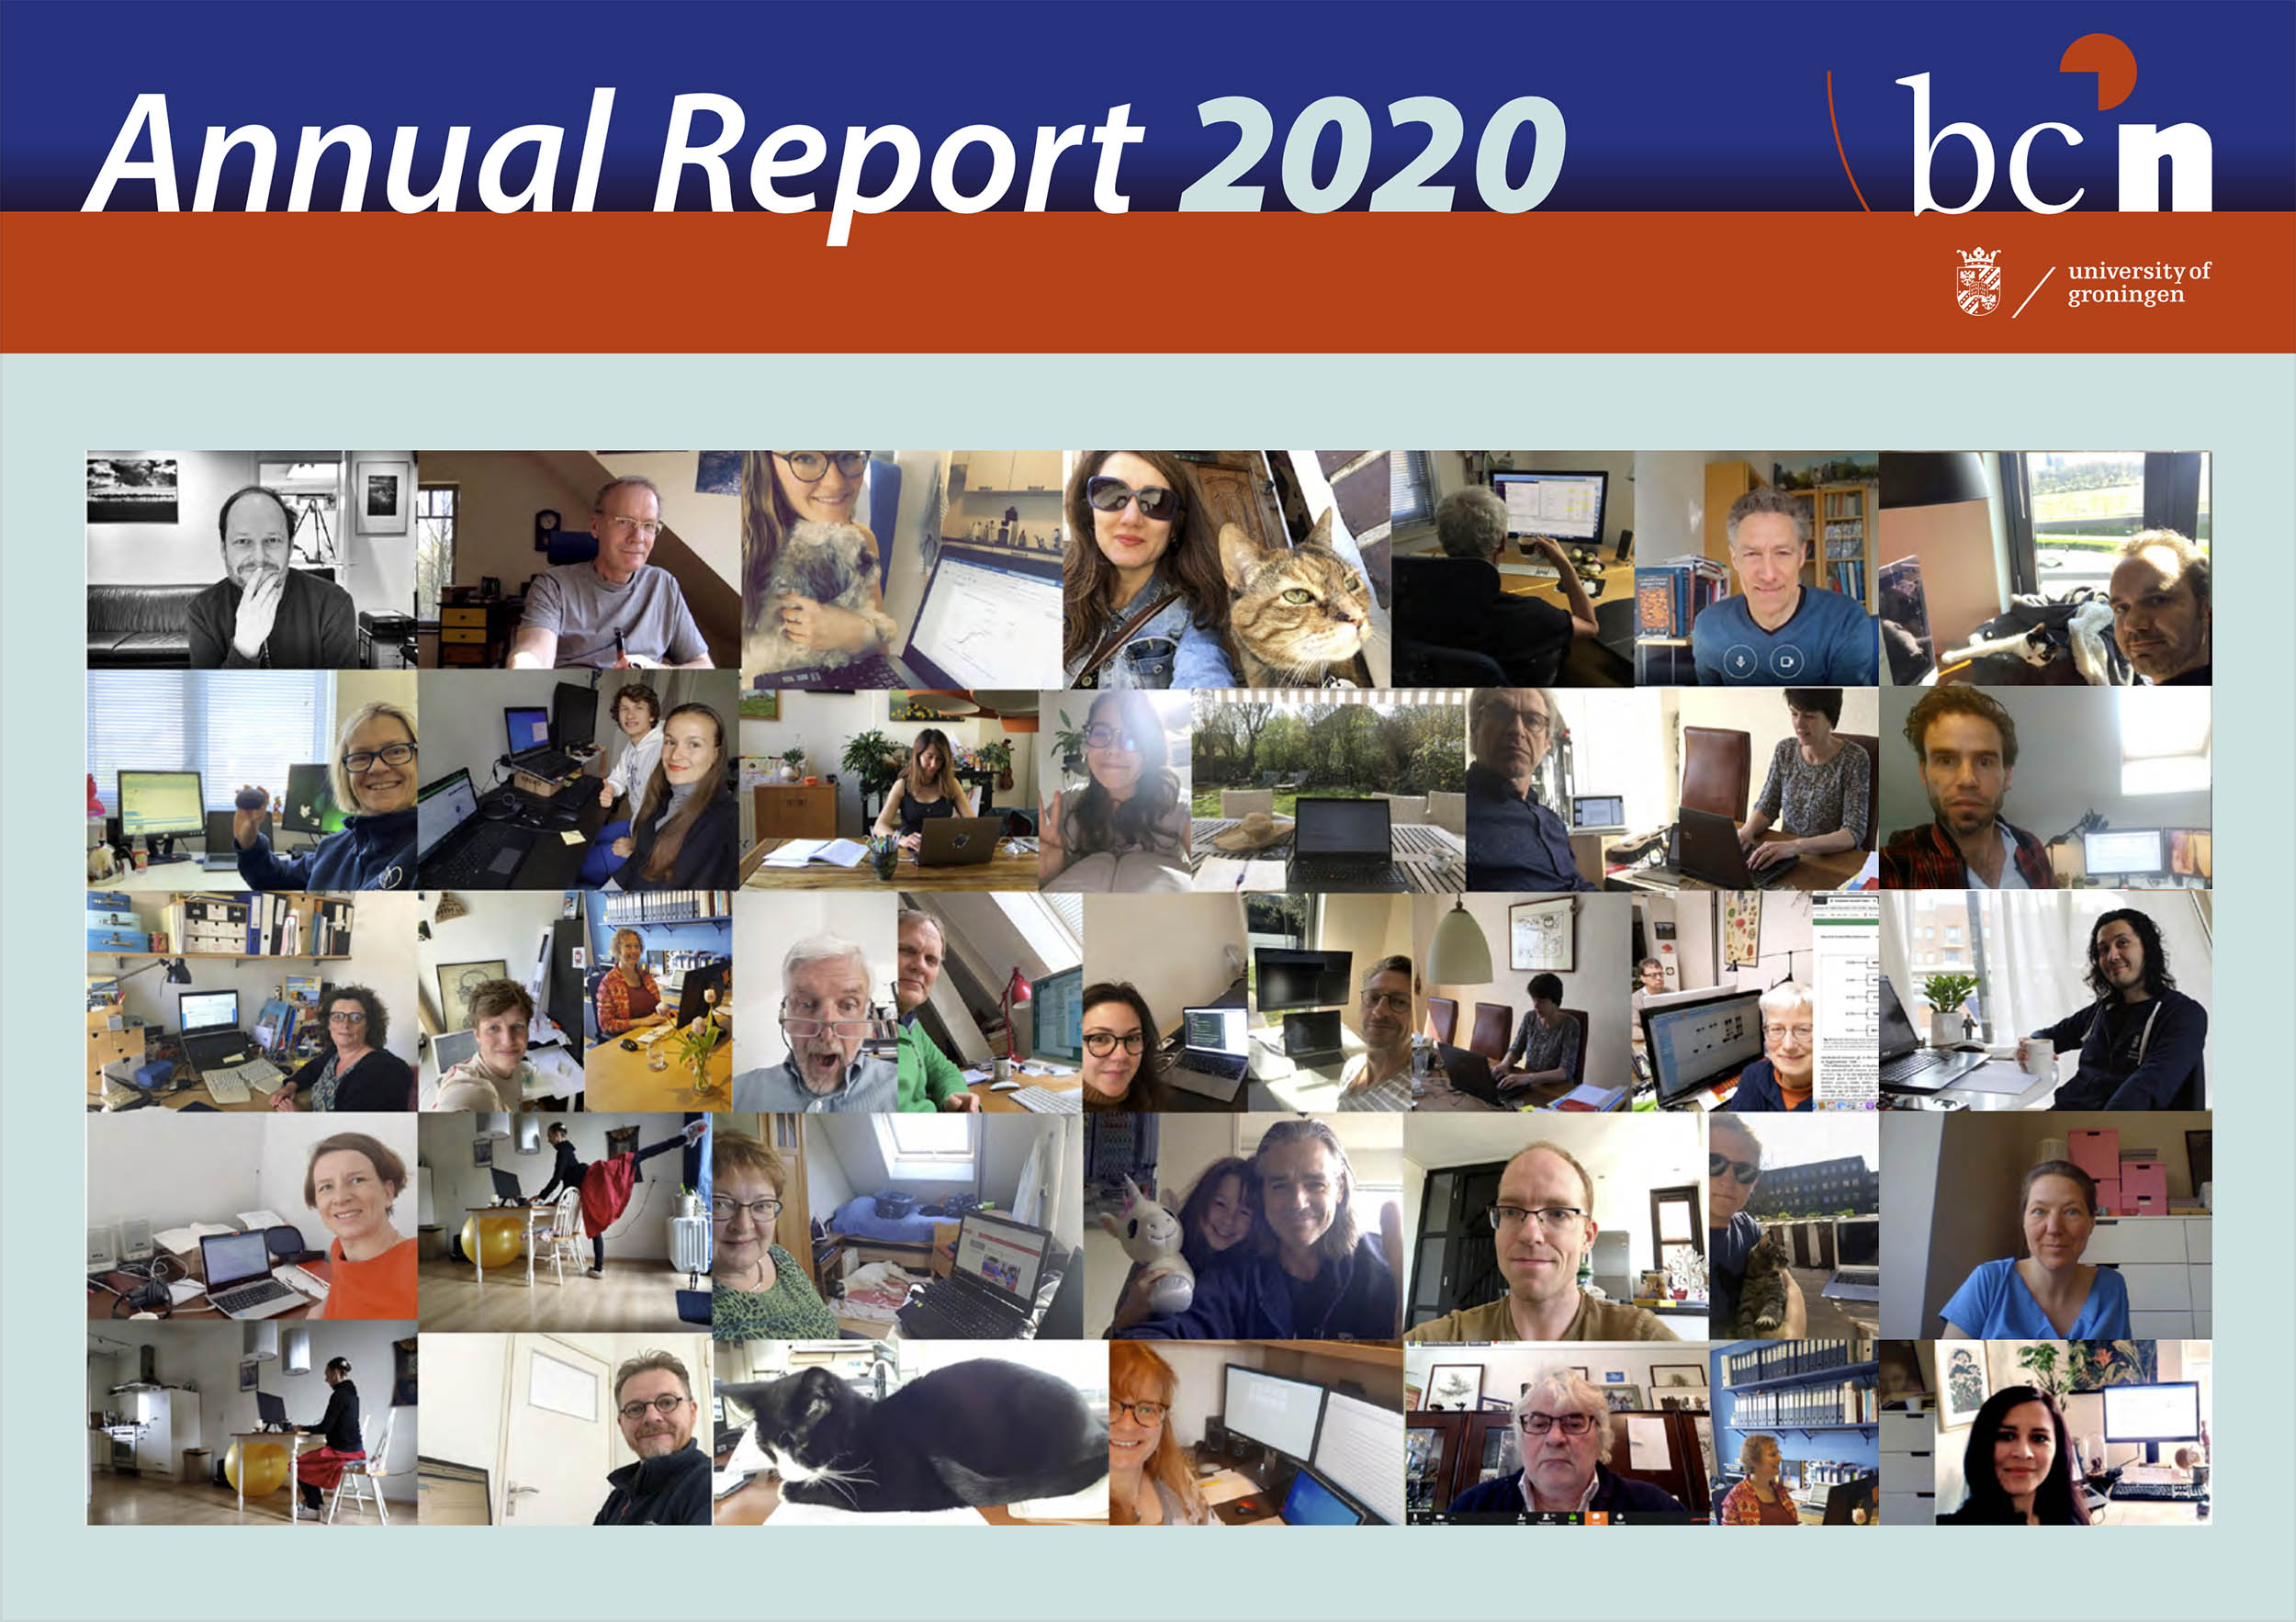 BCN Annual Report 2020